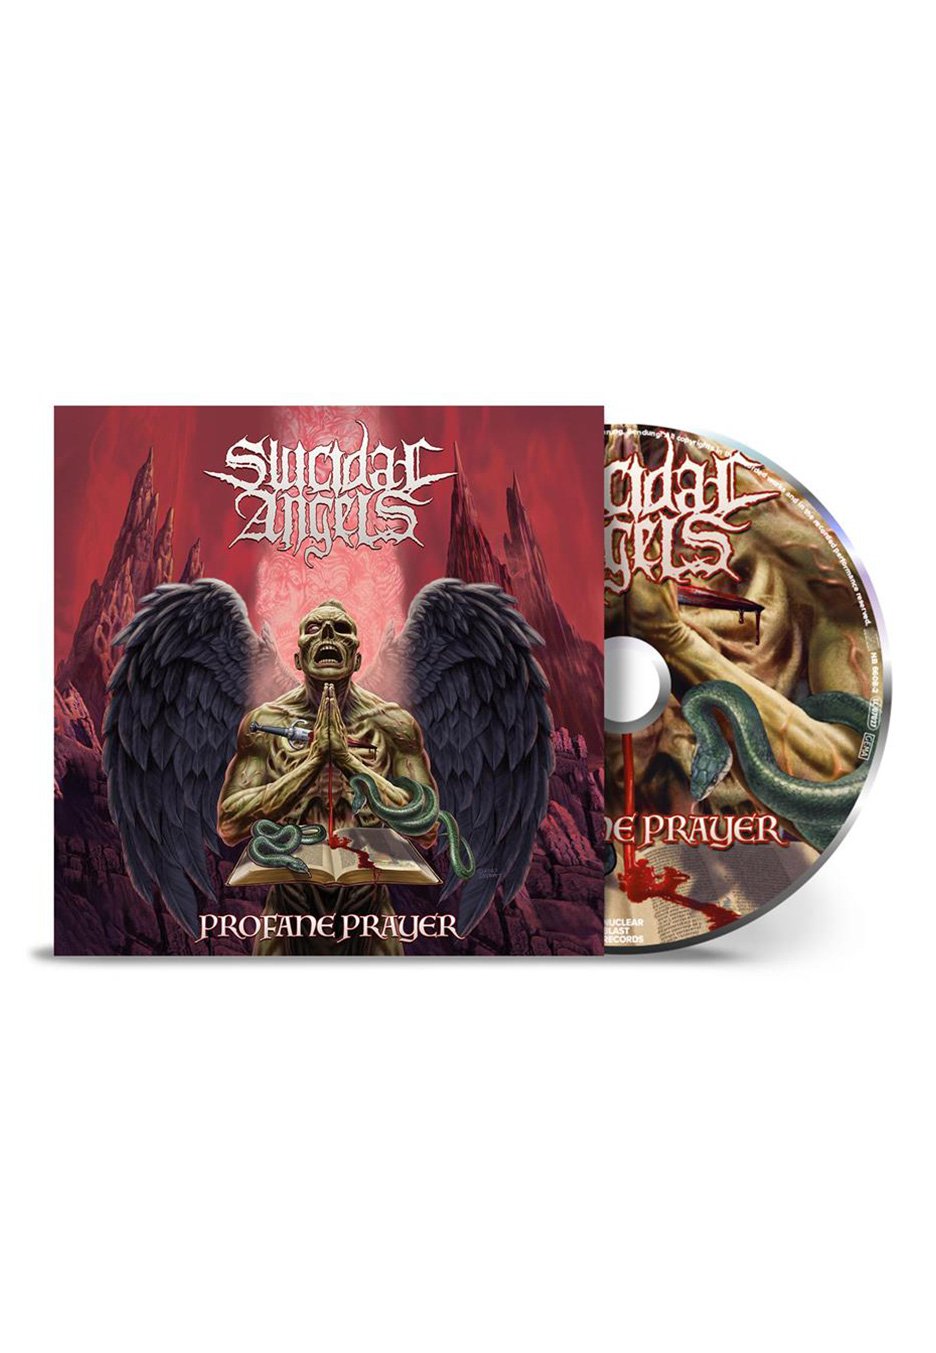 Suicidal Angels - Profane Prayer - CD